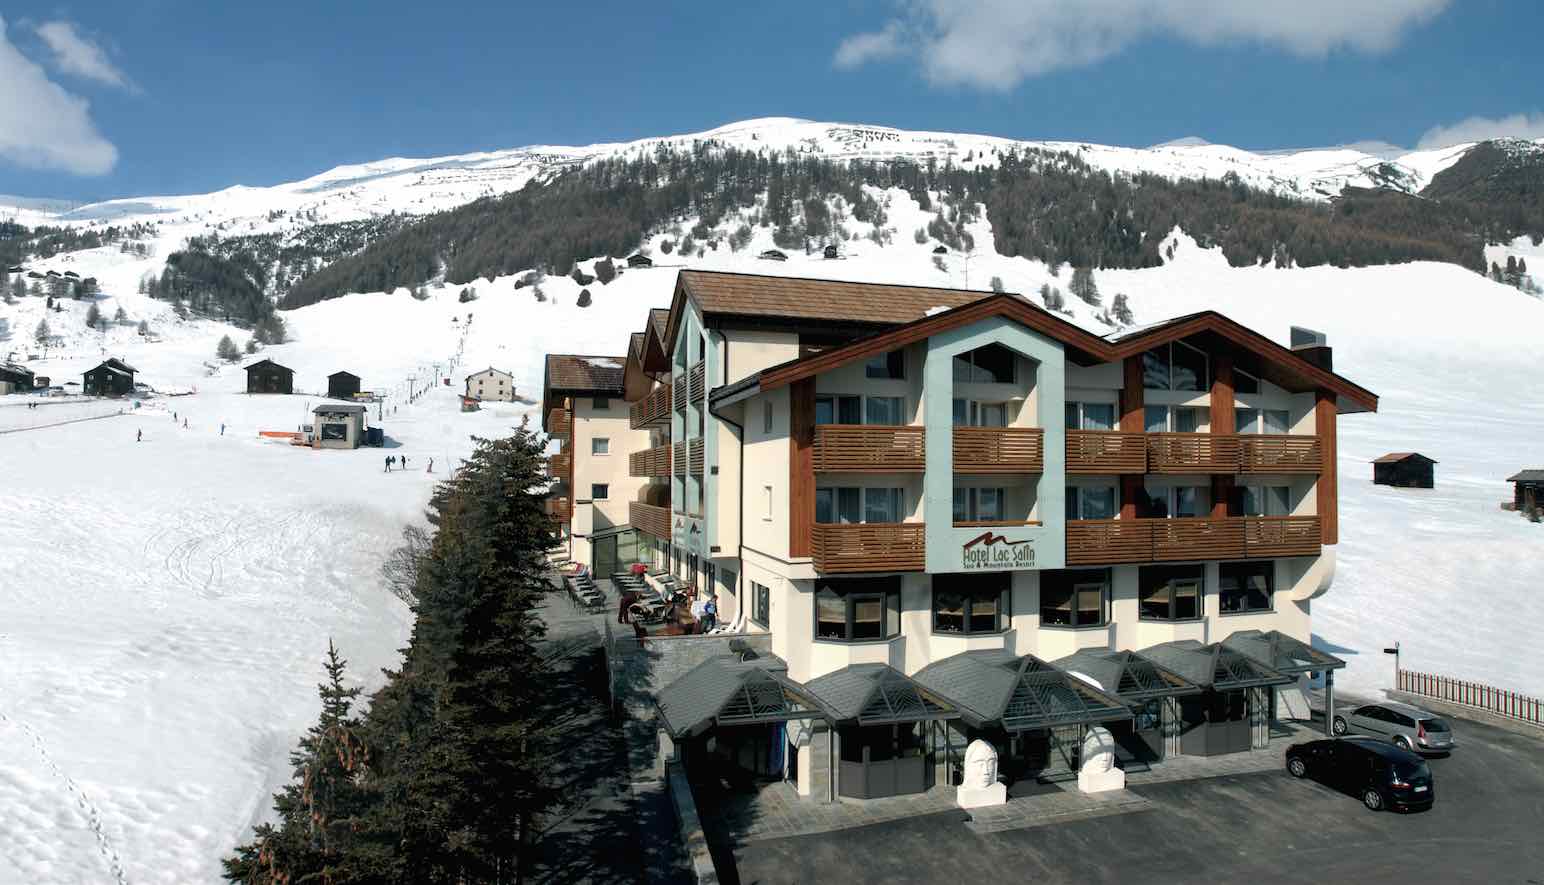 Hotel Lac Salin and Mountain resort - Via Saroch N.496d, Livigno 23041